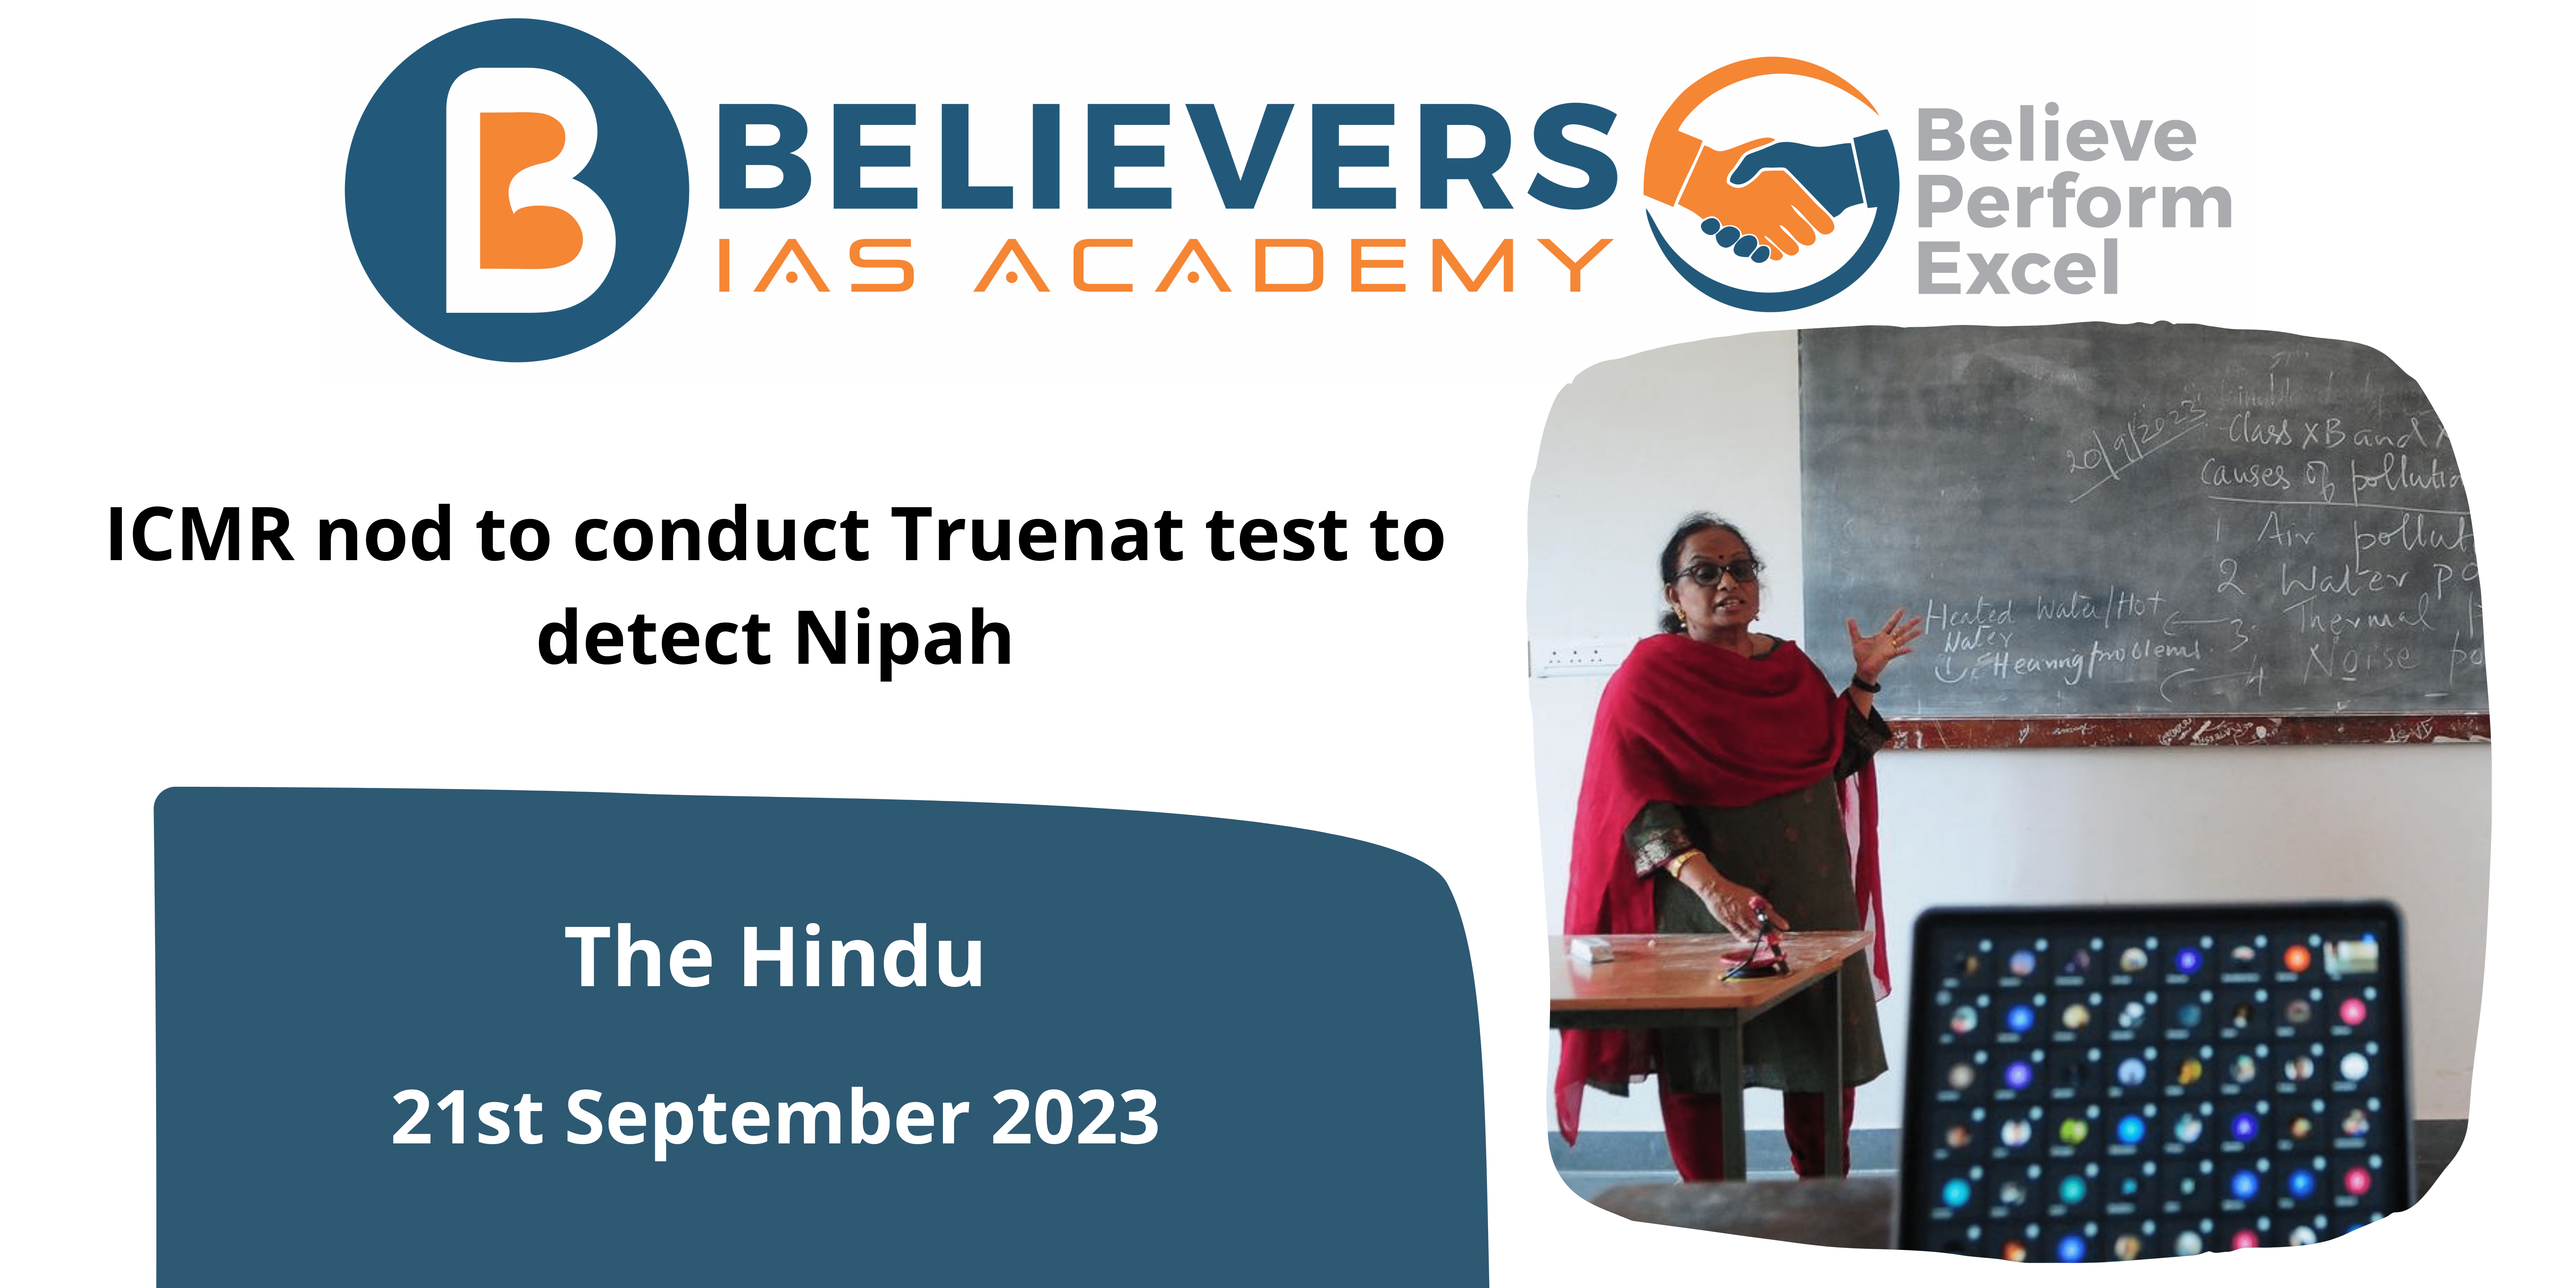 ICMR nod to conduct Truenat test to detect Nipah